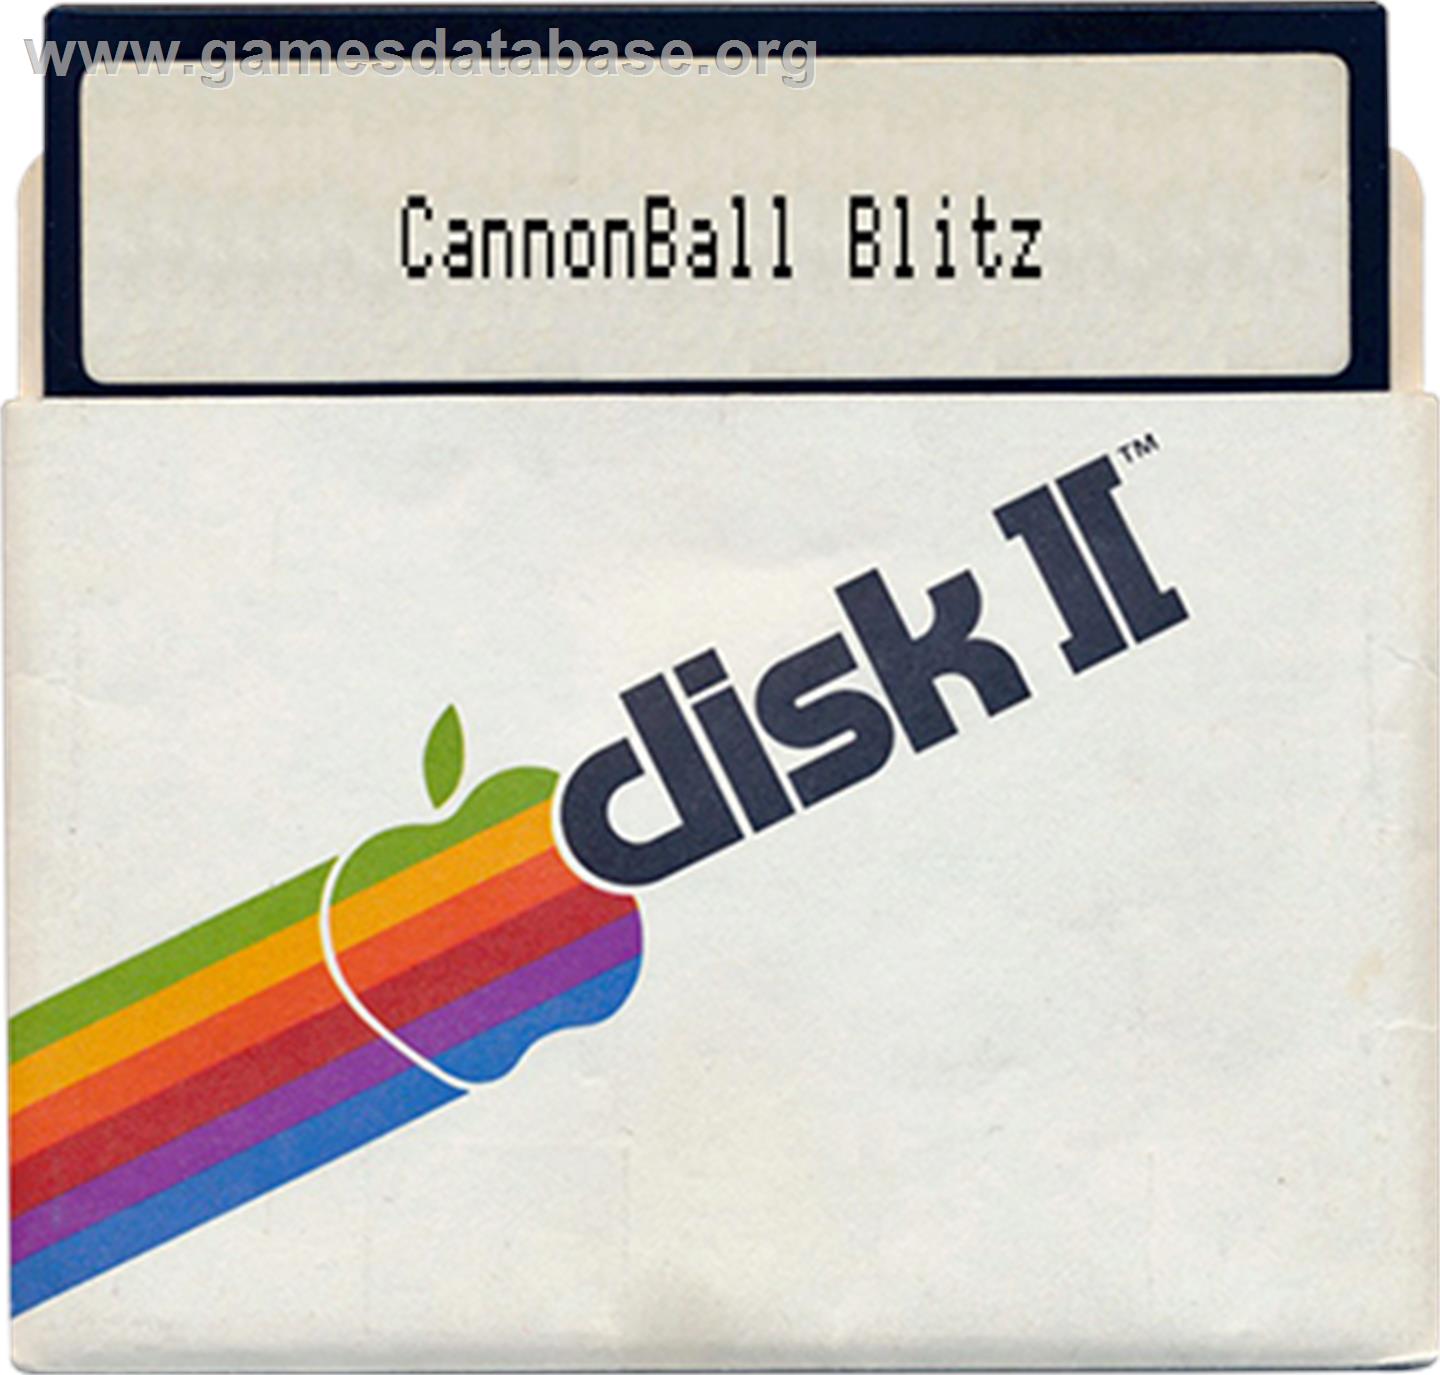 CannonBall Blitz - Apple II - Artwork - Disc